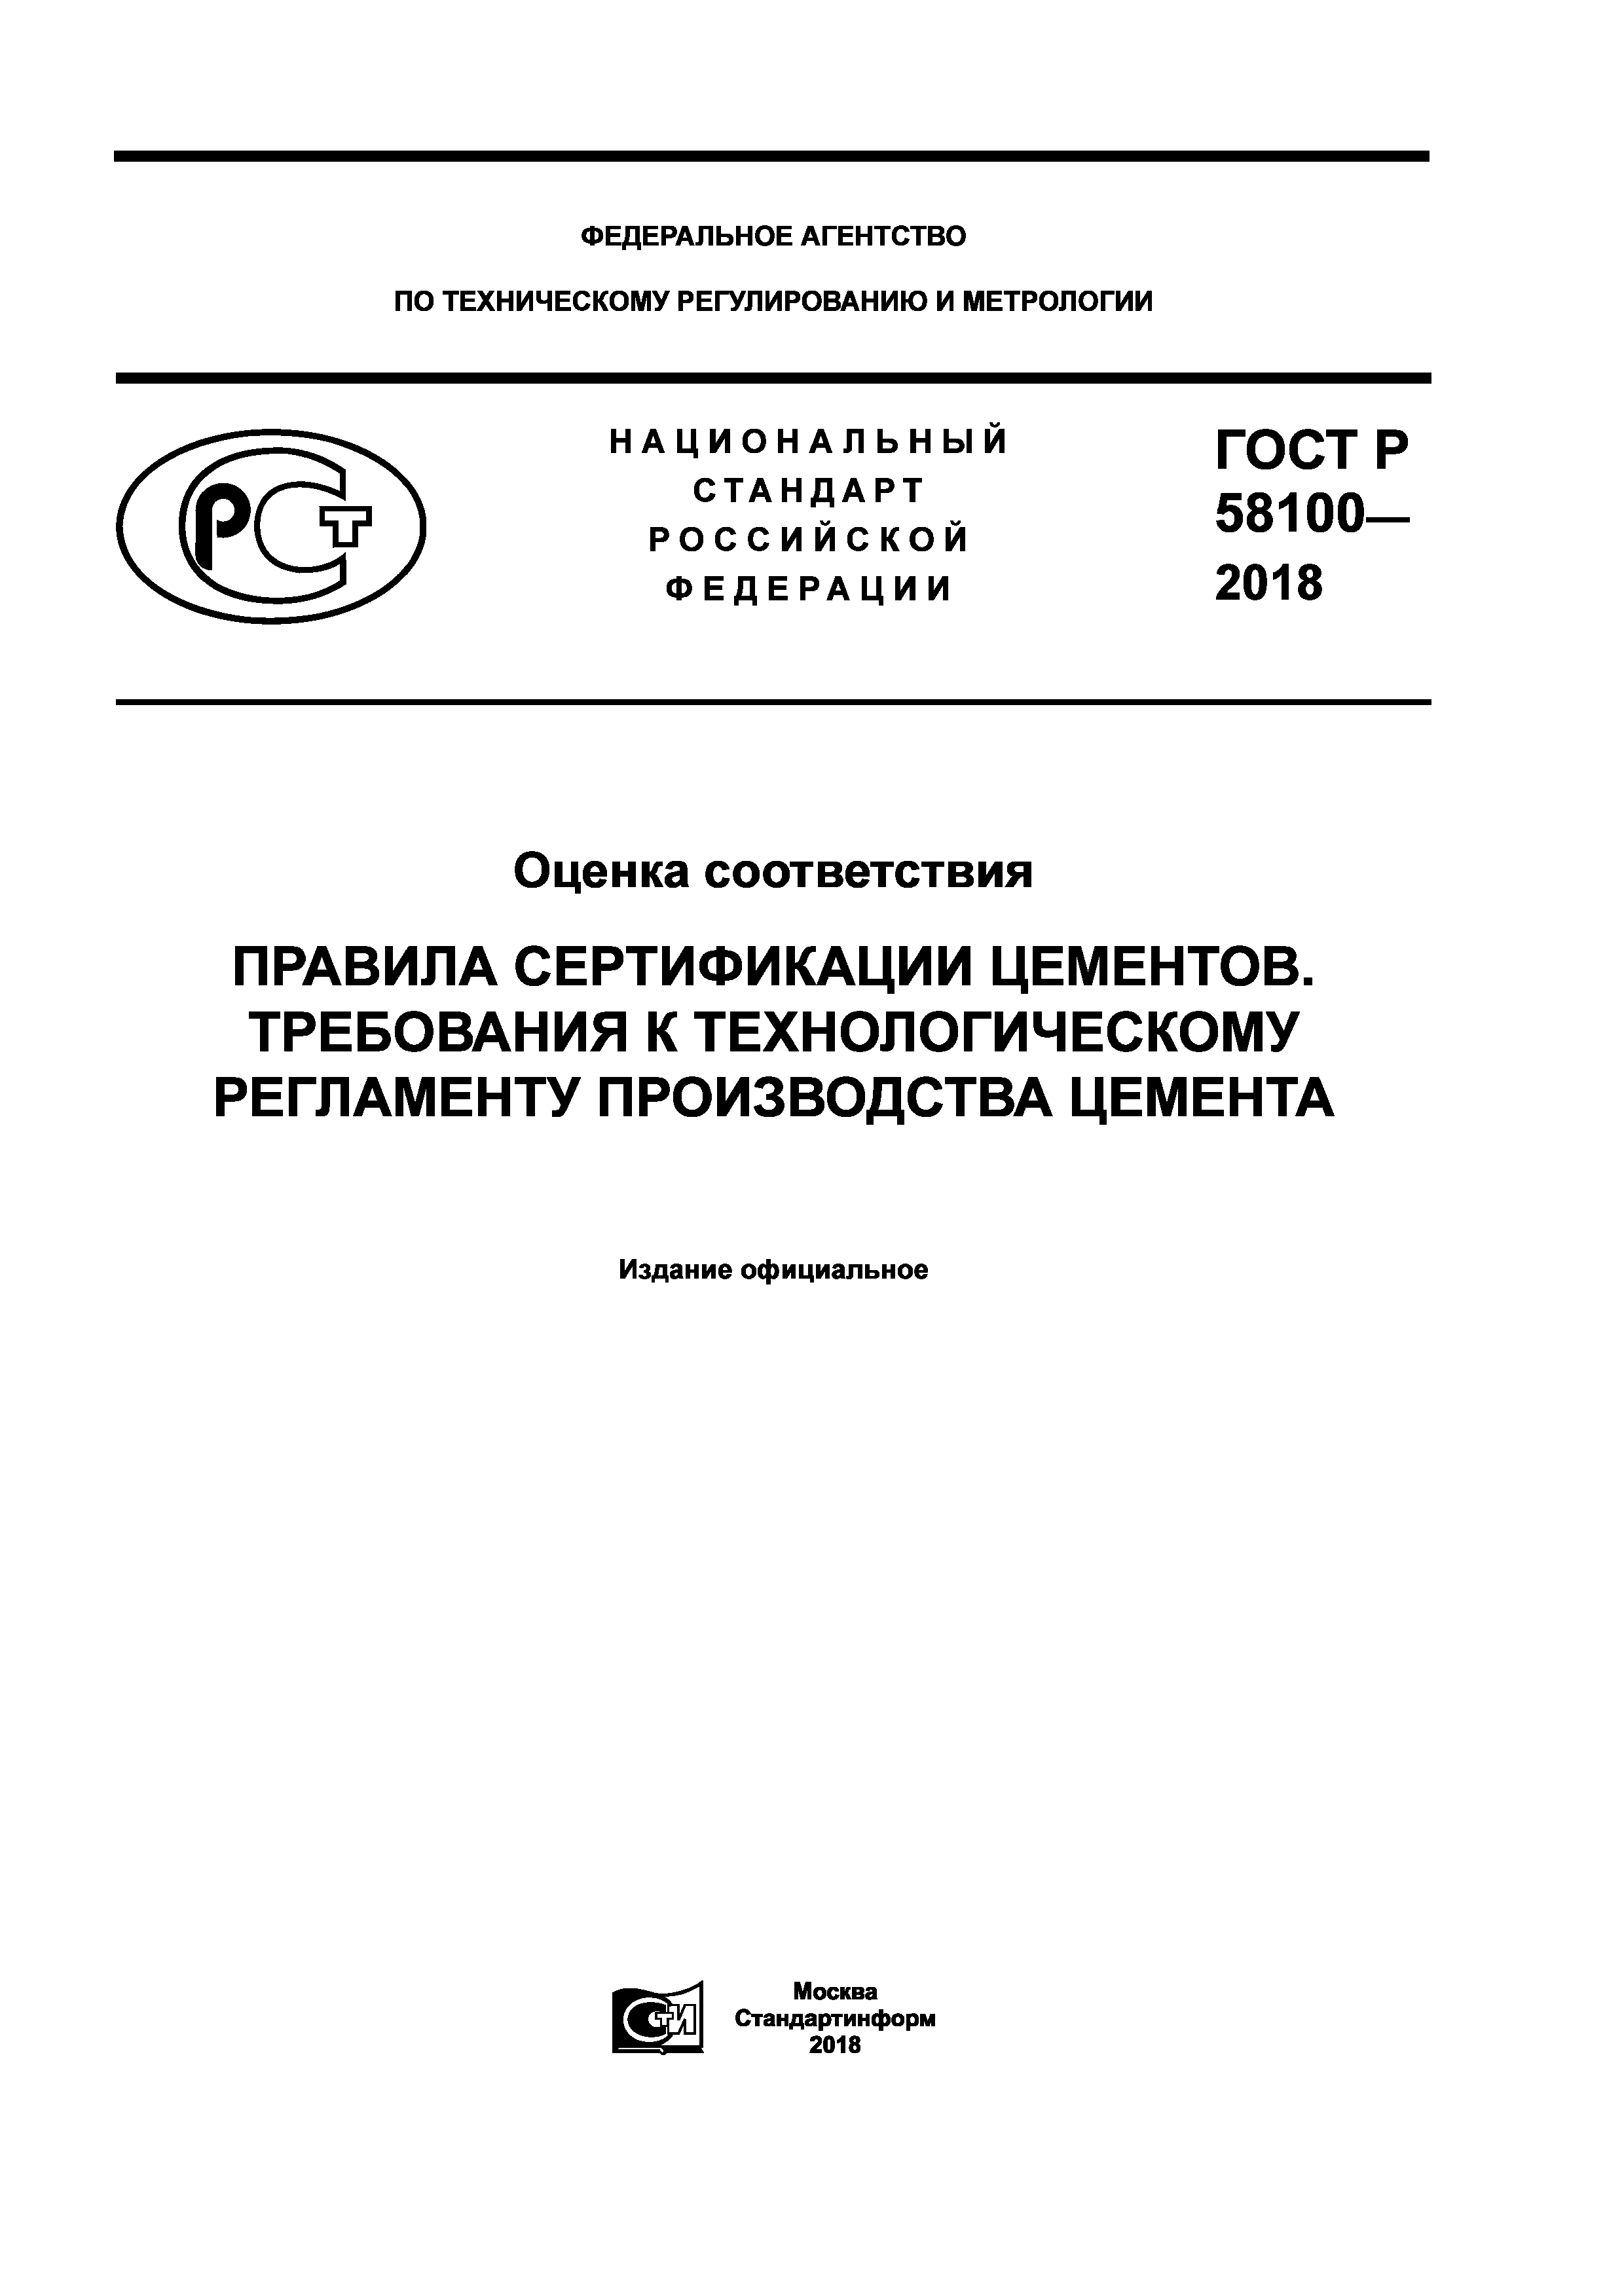 ГОСТ Р 58100-2018